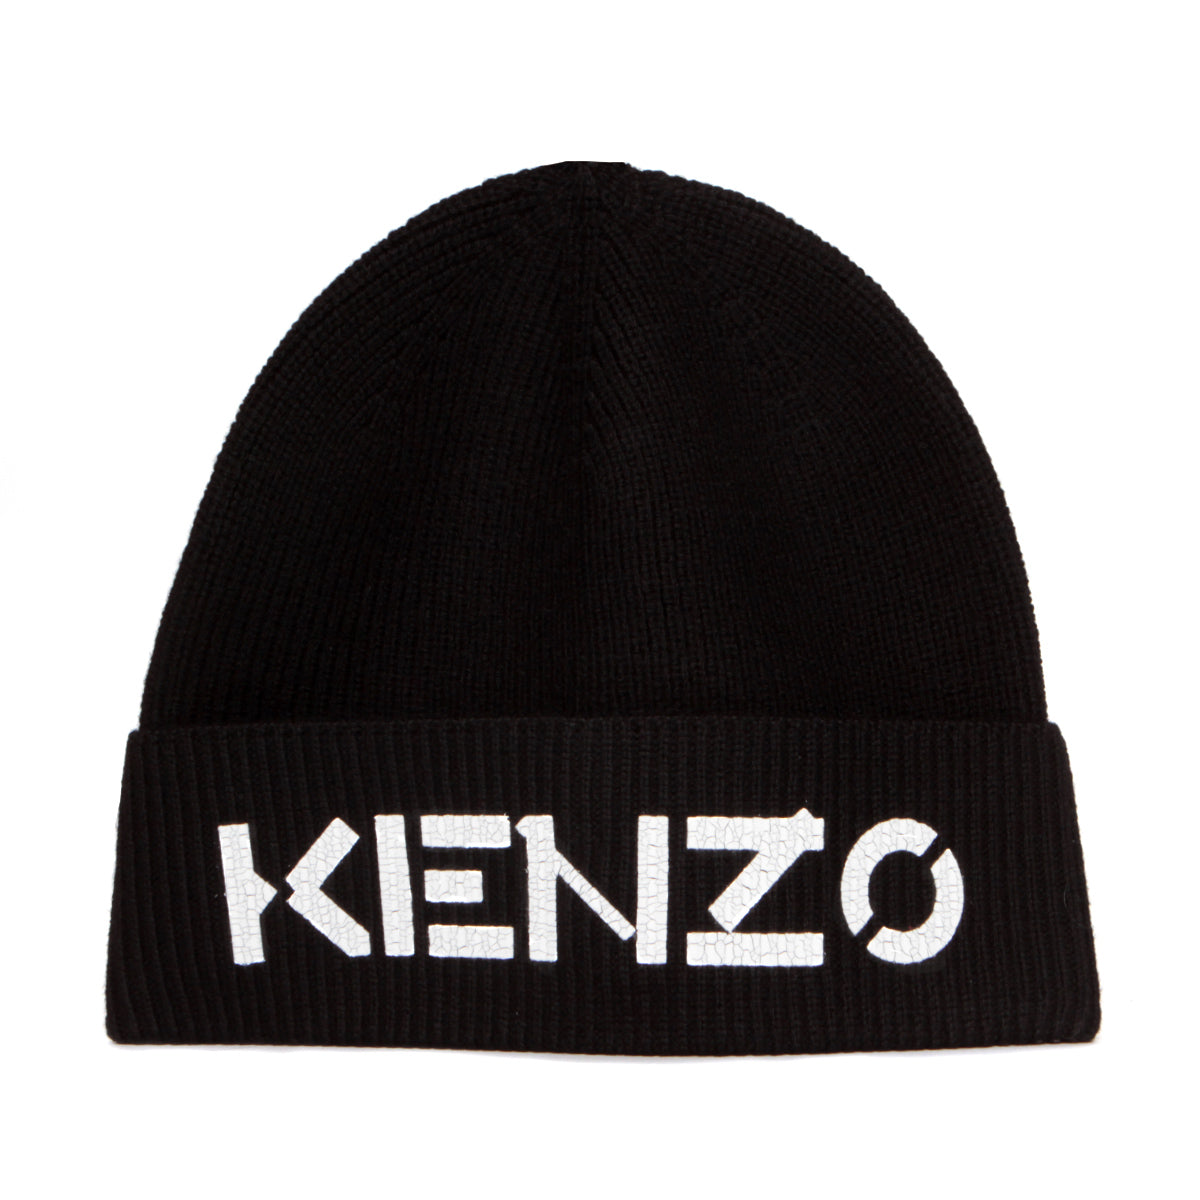 Kenzo Paris Painted Kenzo Logo Knit Beanie Black